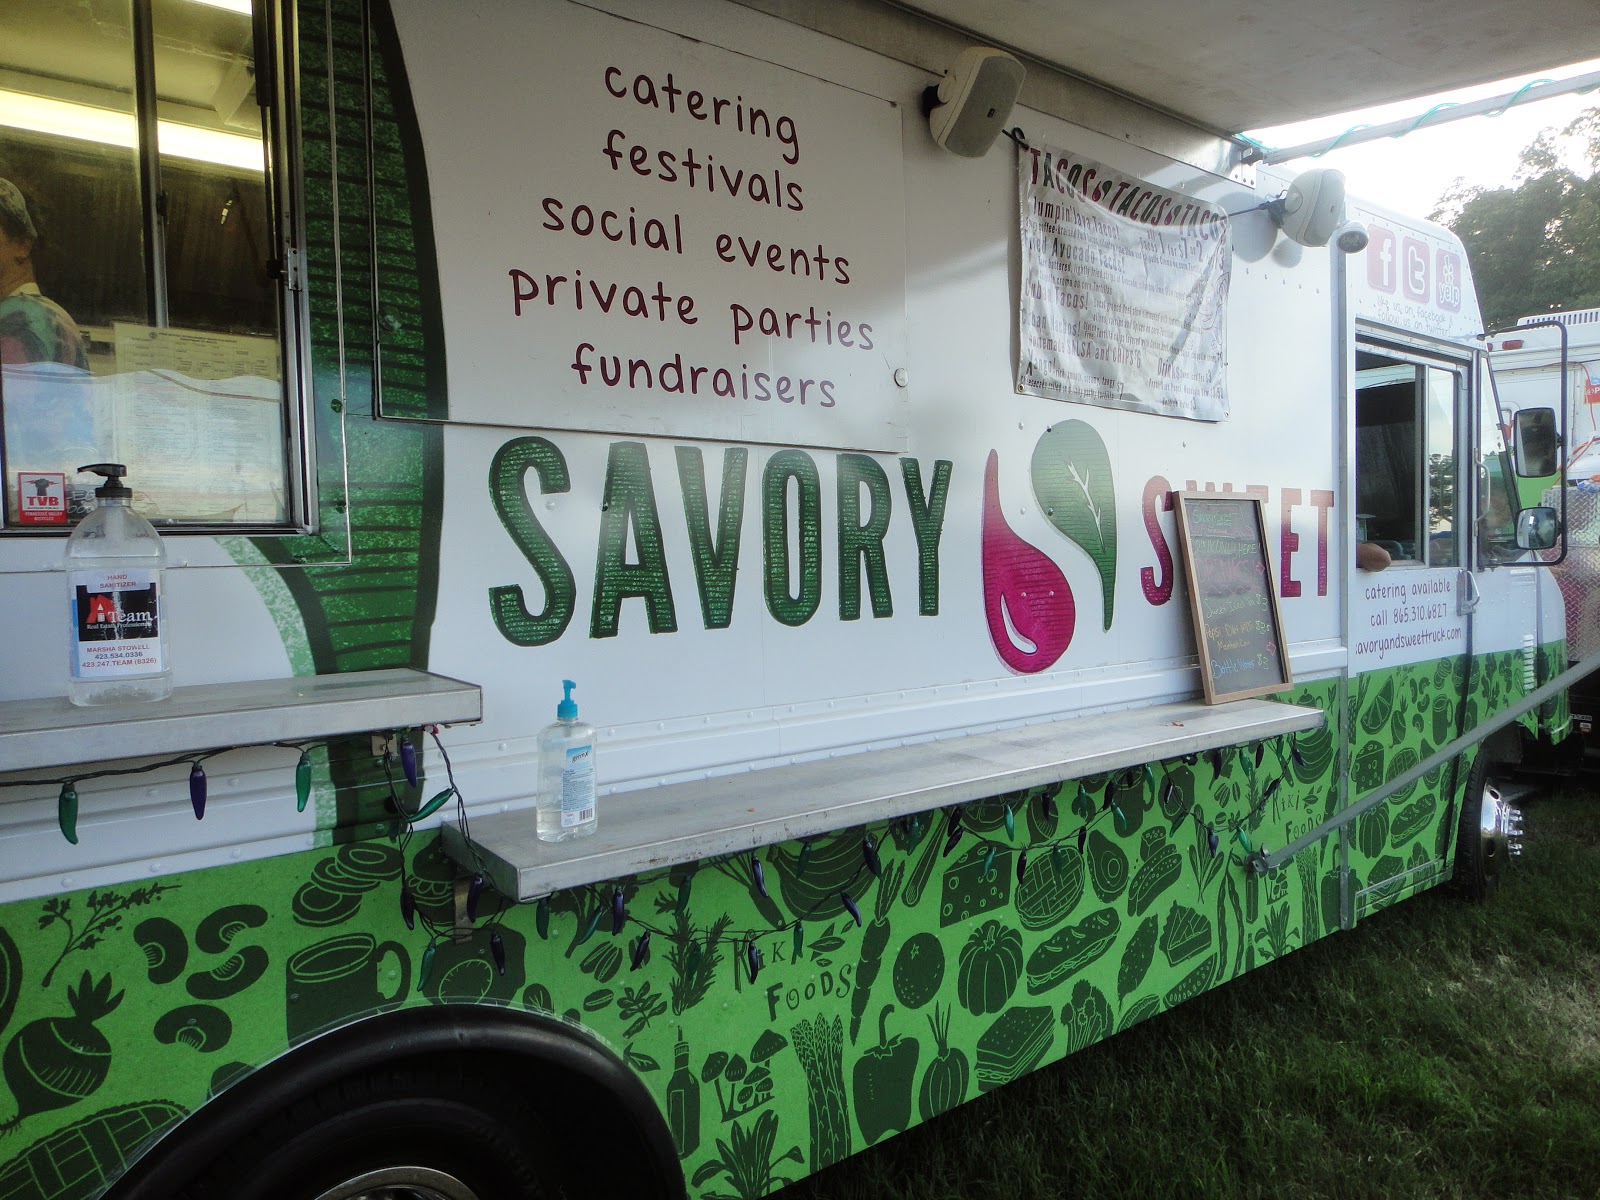 Savory Street Food Truck, Bonnaroo 2013